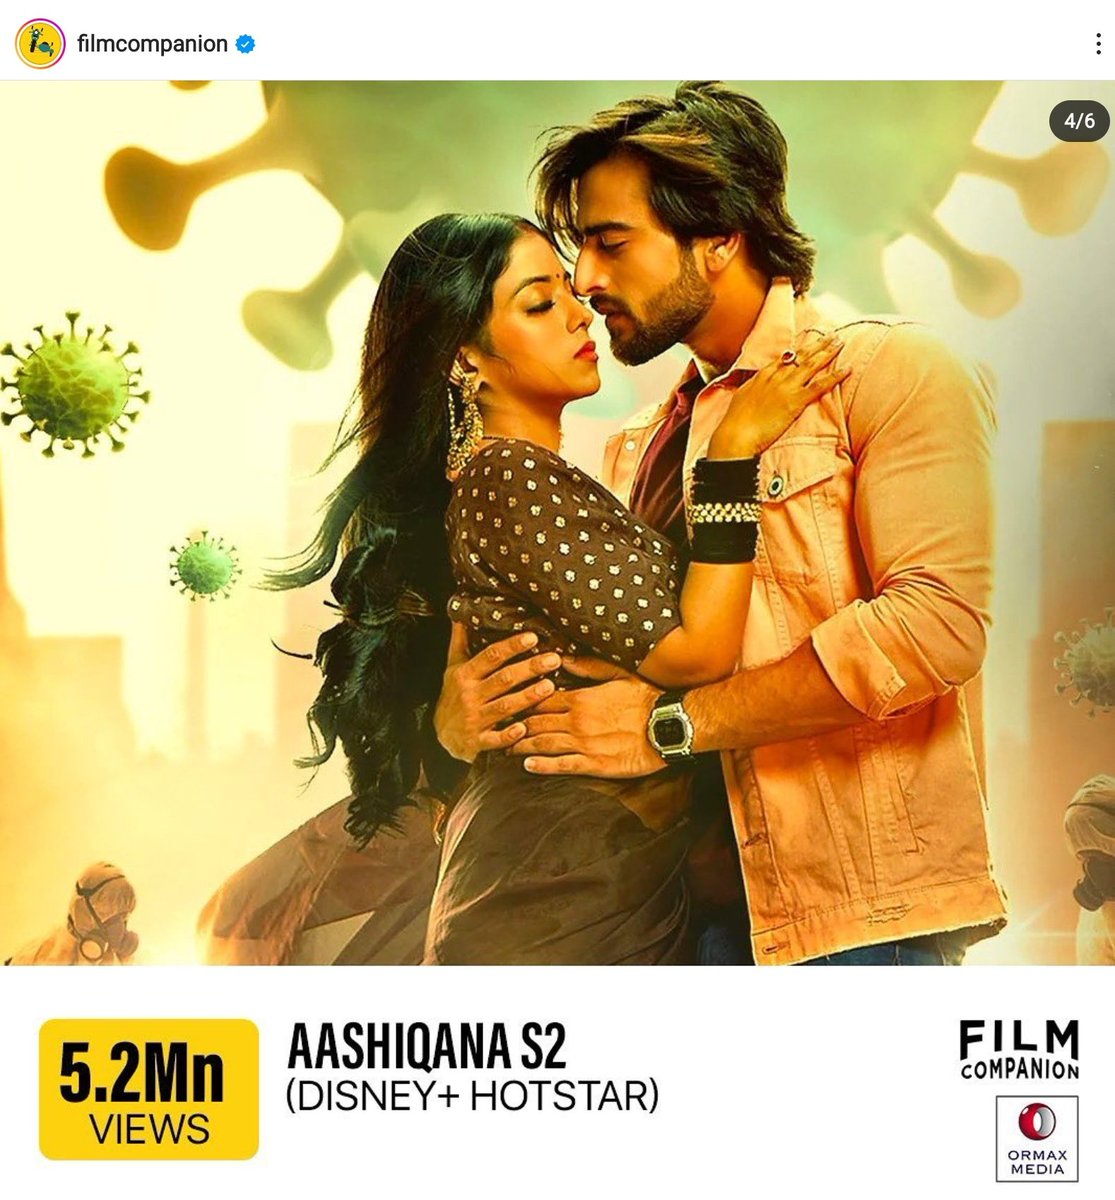 Aashiqana first time 5.2m views crossed 
#Aashiqana2
#AashiqanaOnHotstar 
#Aashiqana2onHotstar